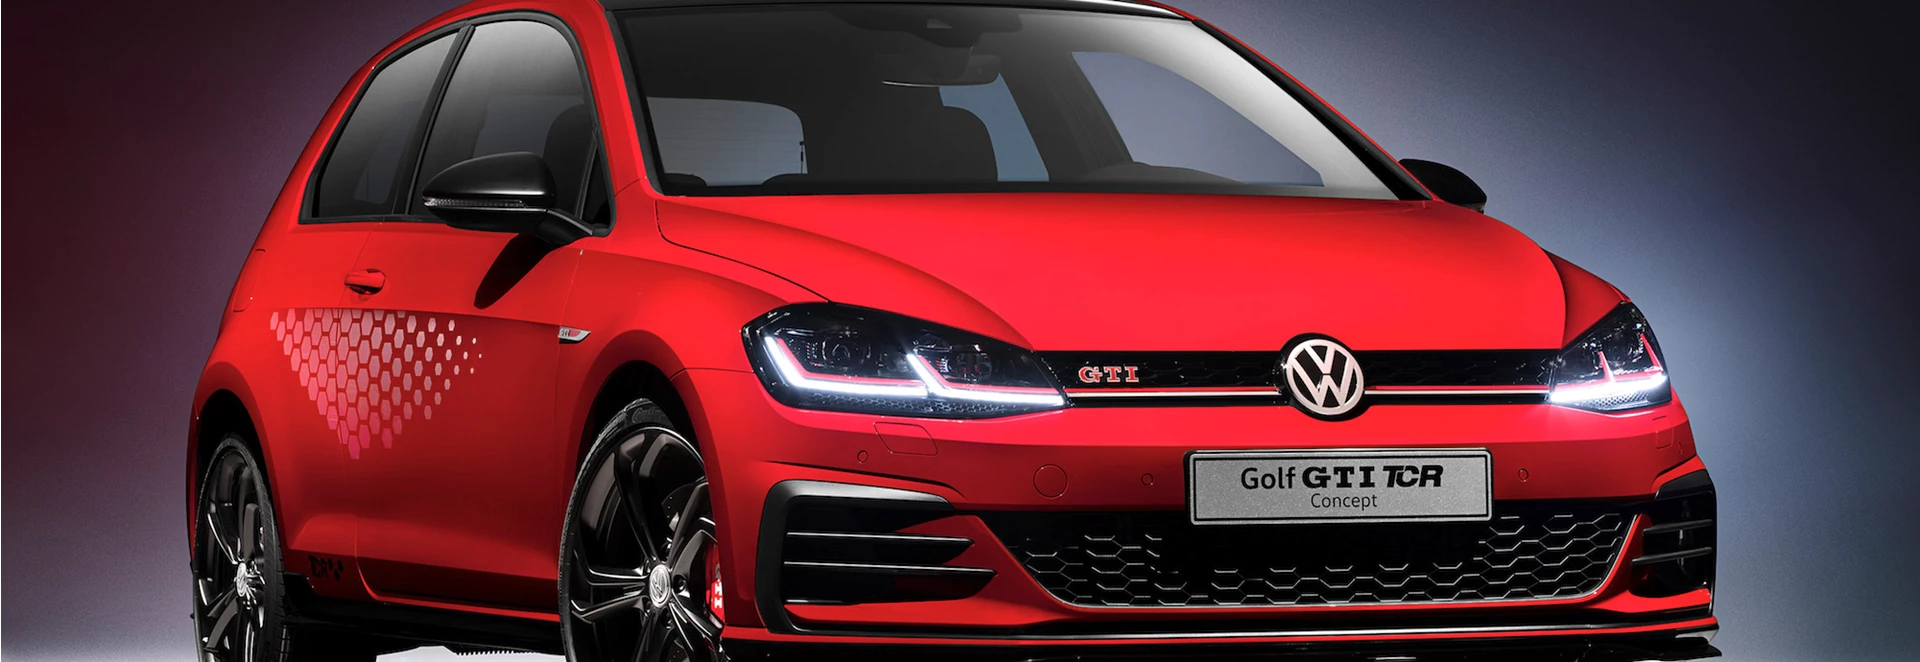 Volkswagen unveils racing-inspired Golf GTI TCR